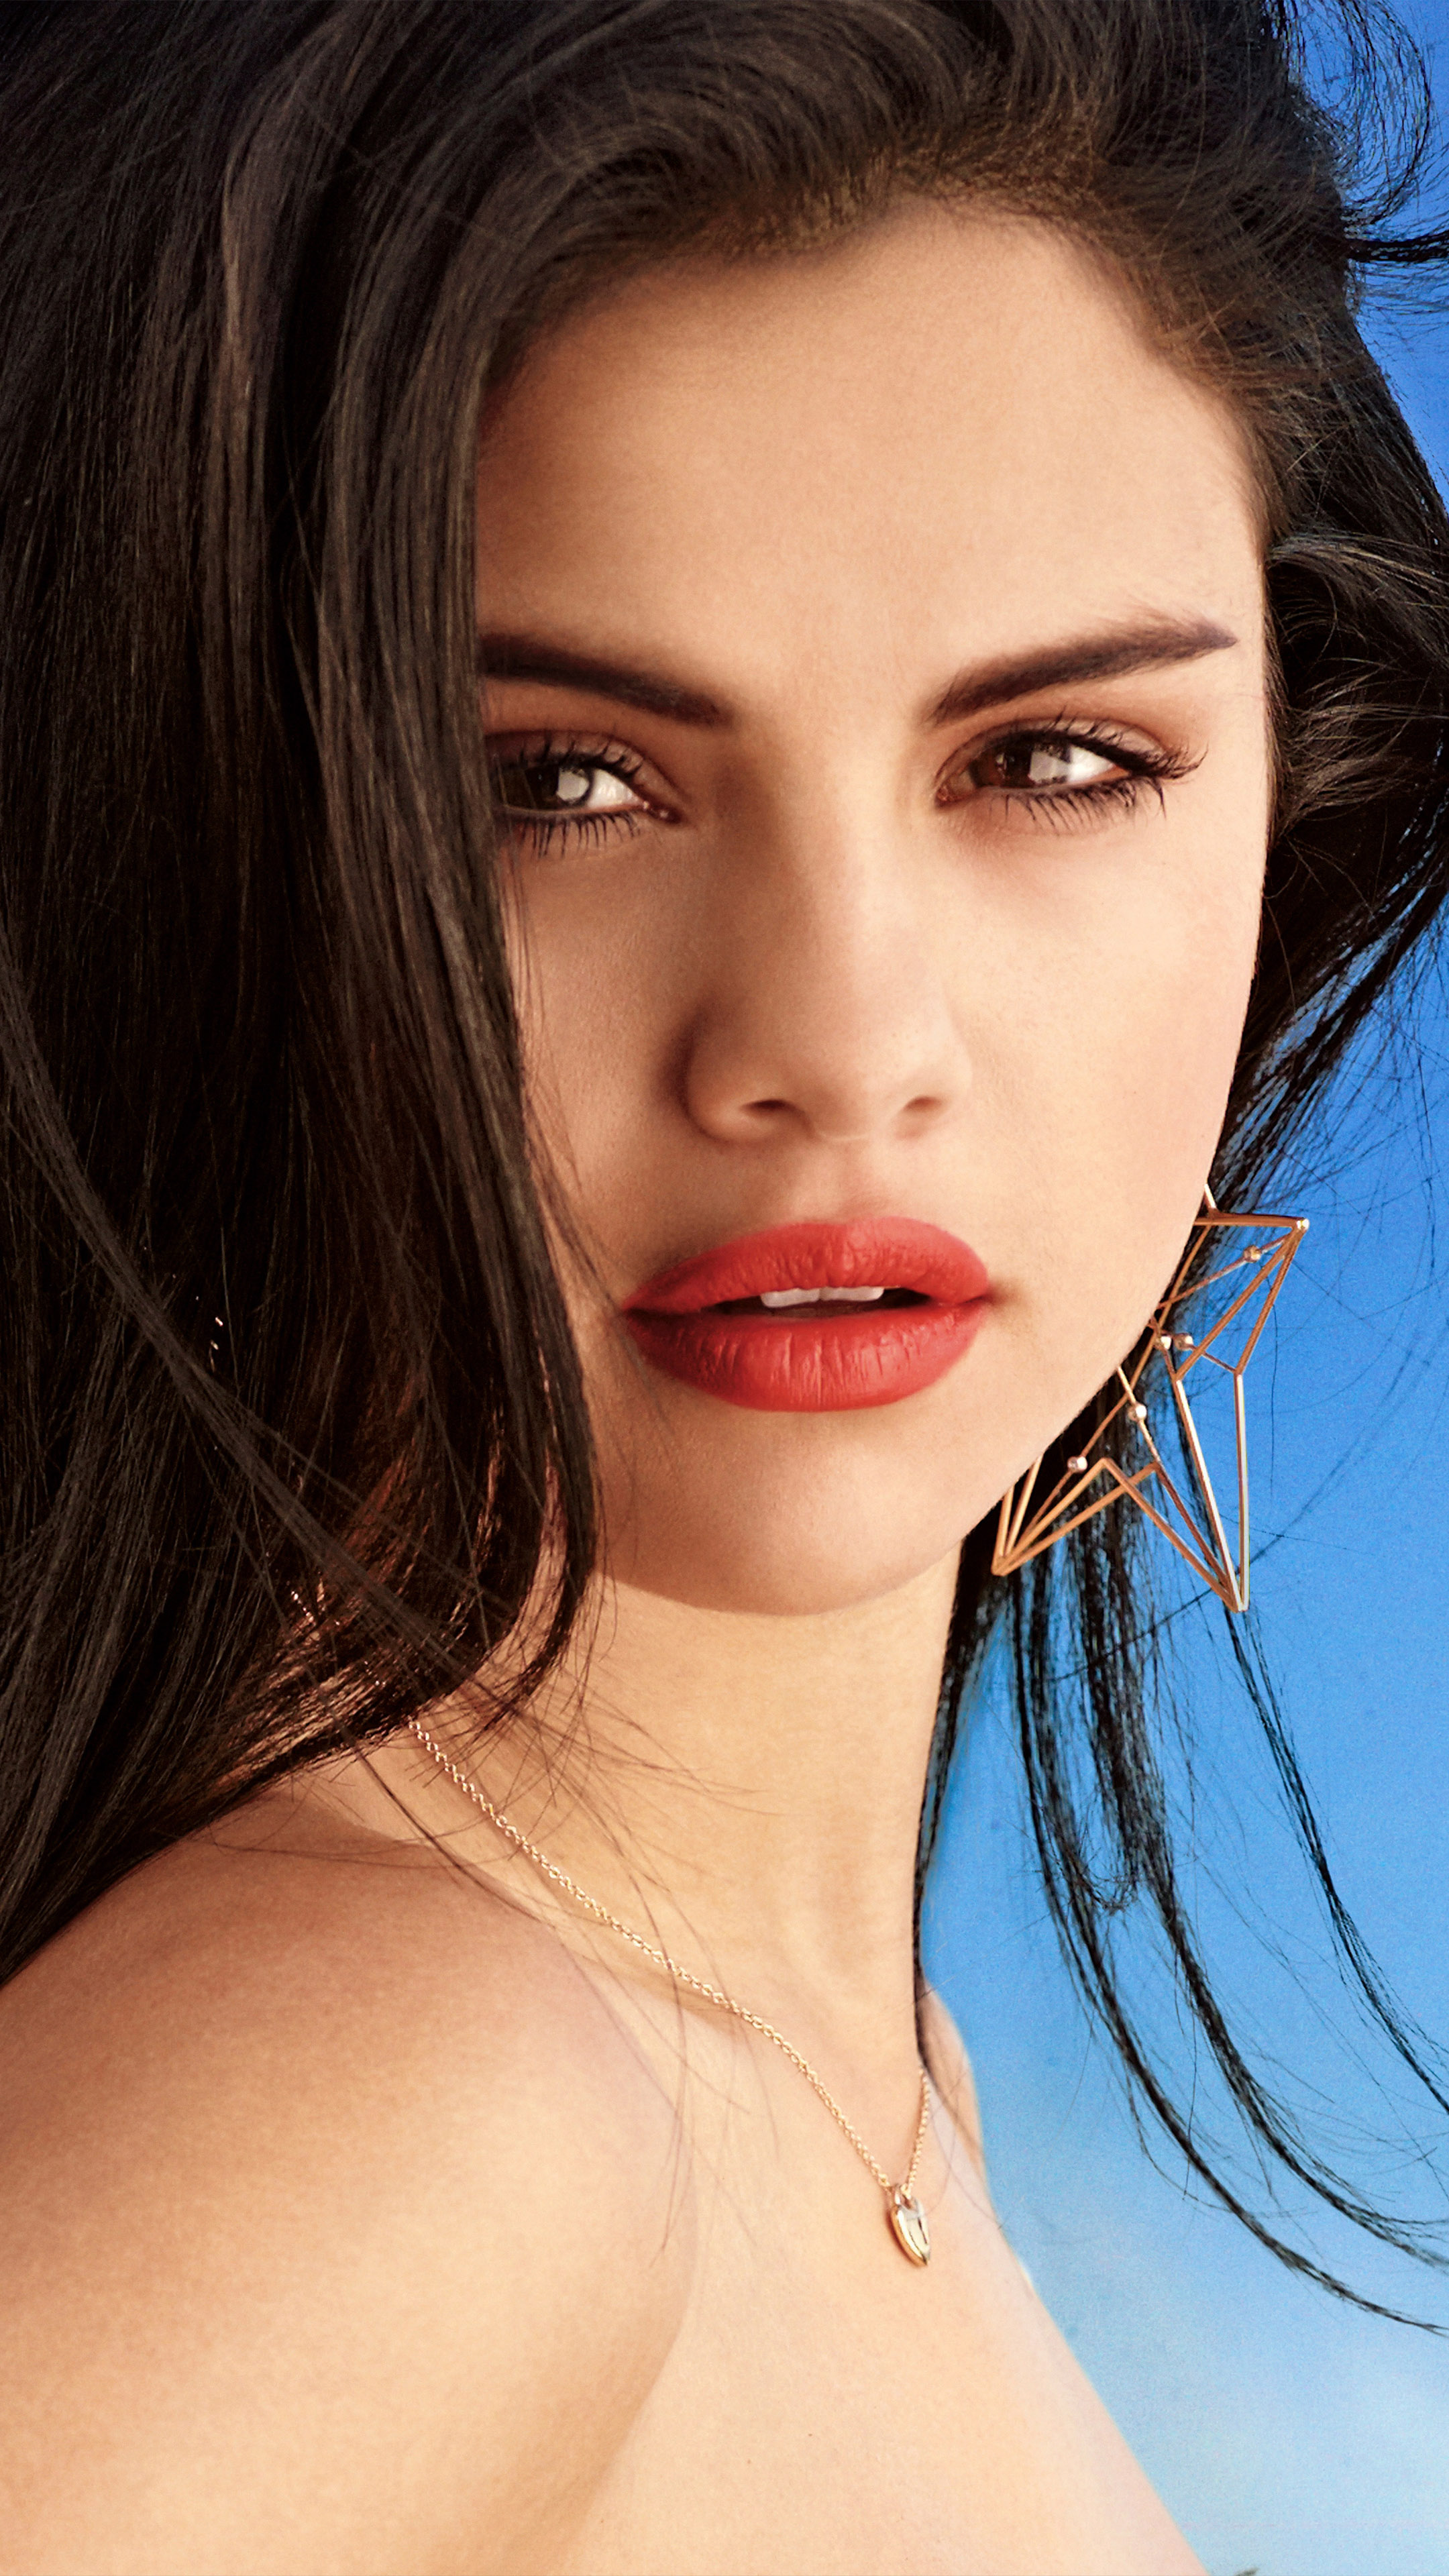 Selena Gomez 2021 Wallpaper 4k Ultra HD ID:7399